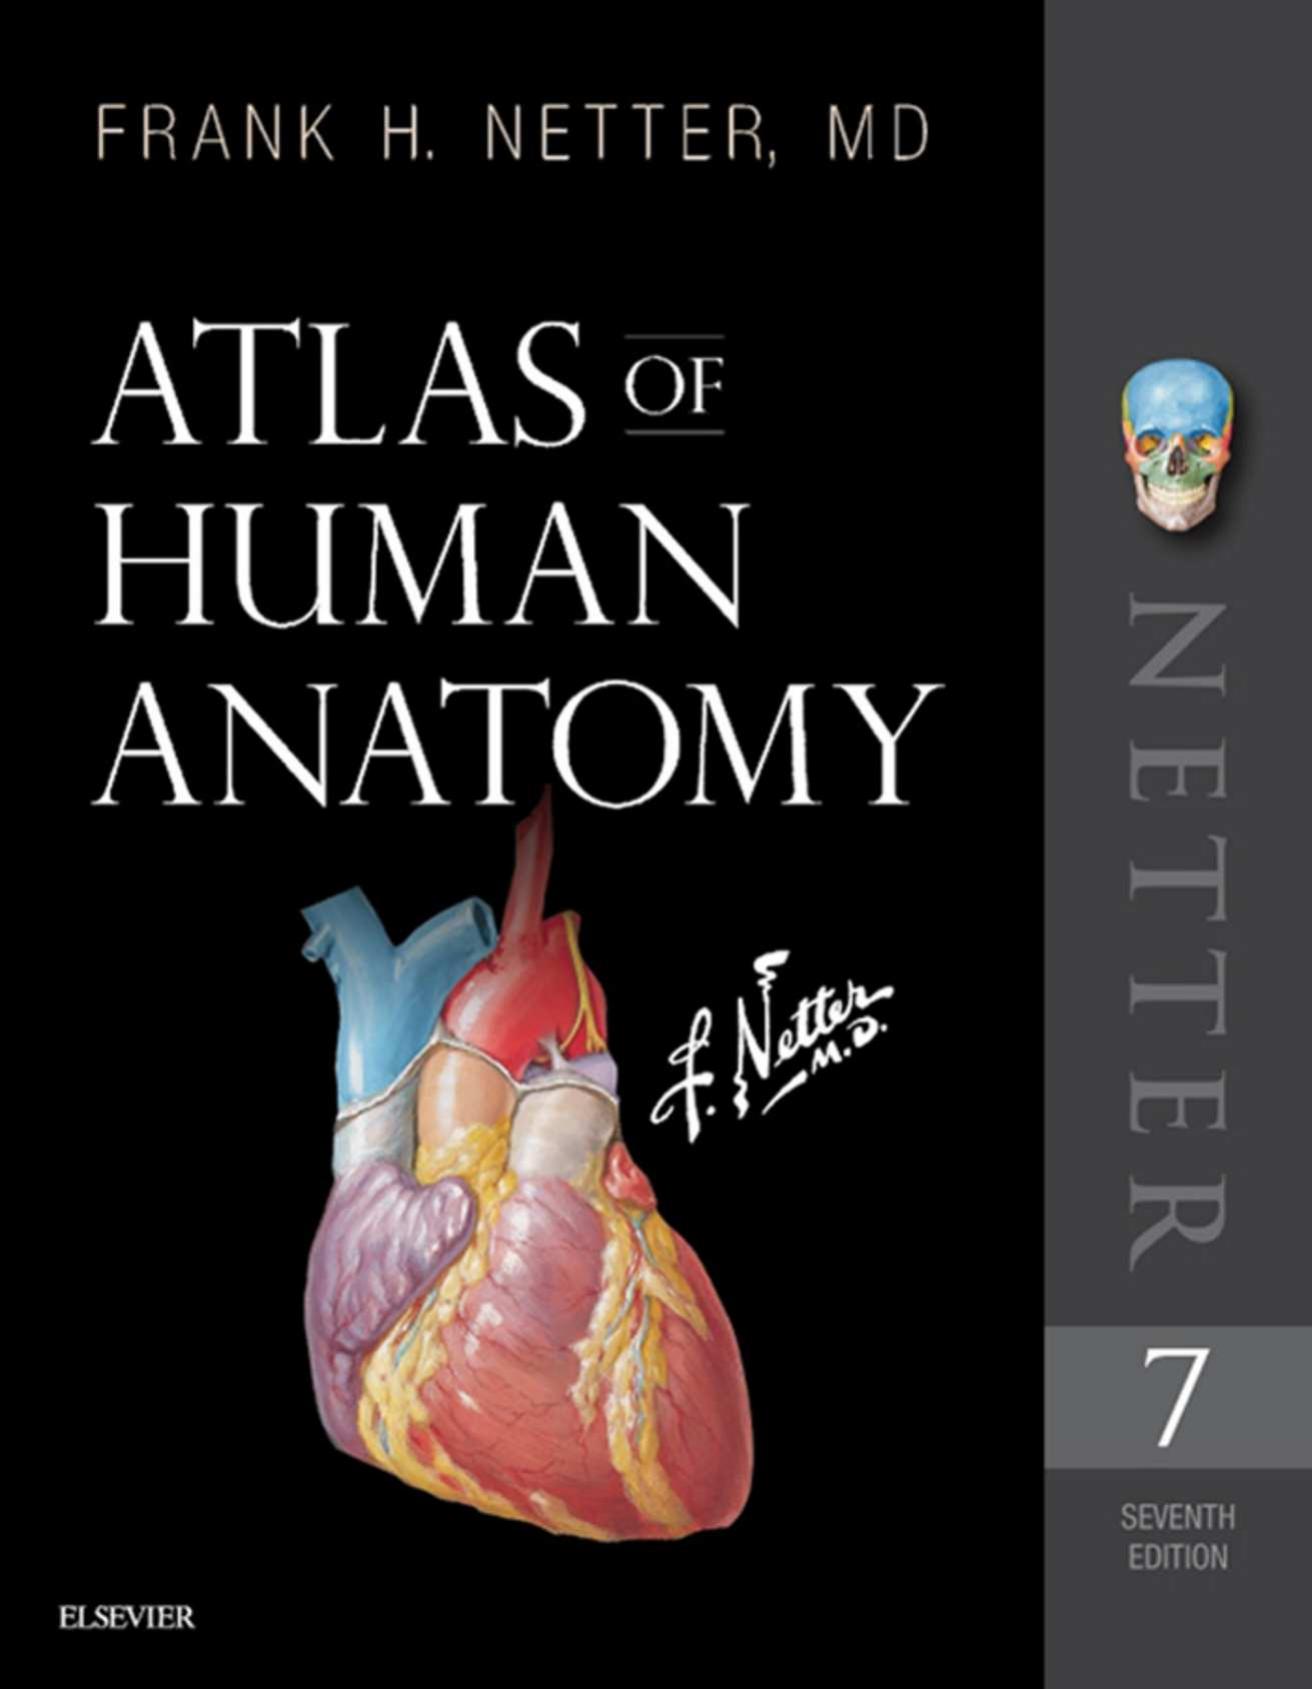 Atlas of Human Anatomy 2018